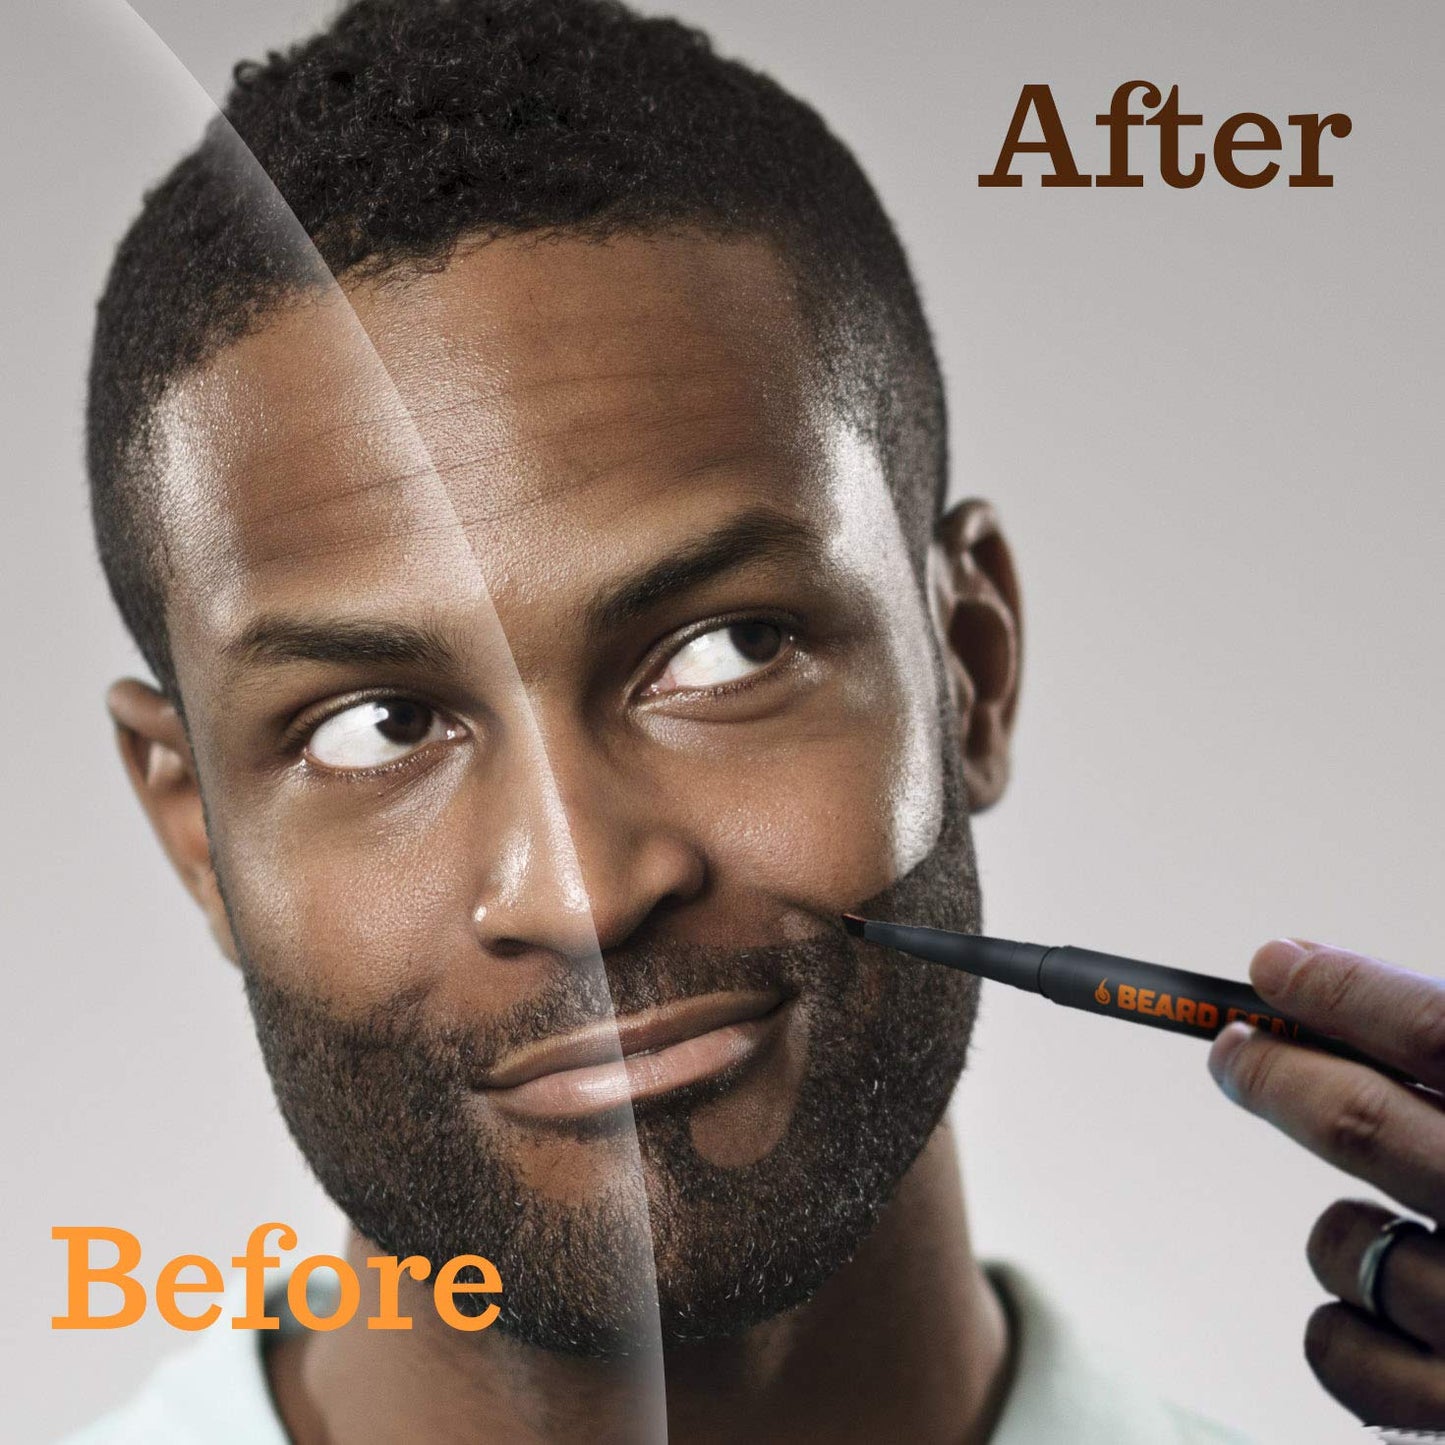 Beard Growth Pen & Brush - Follicle Booster